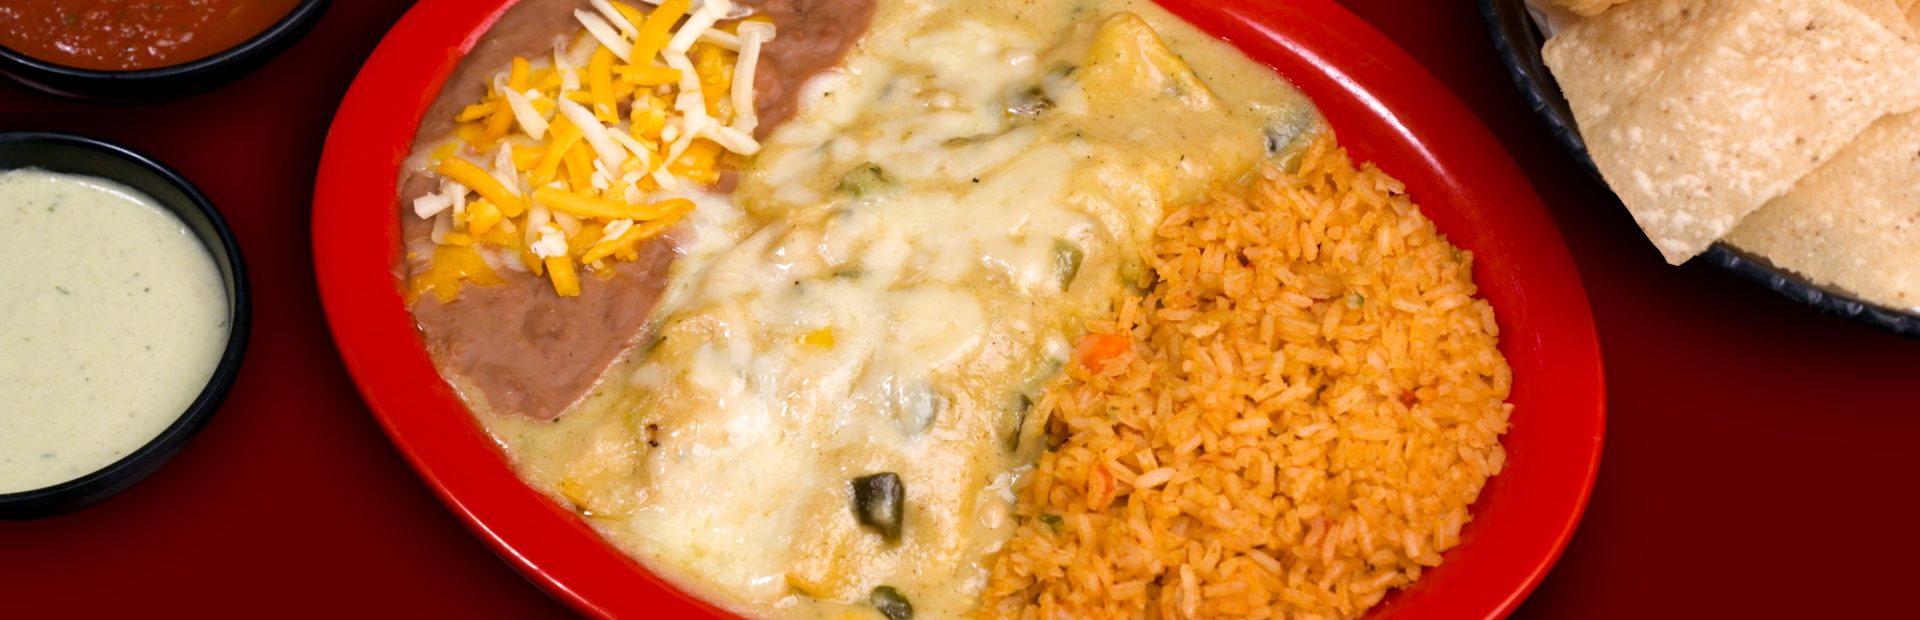 Enchilada plate Jalapeno Tree Mexican Restaurant Texas